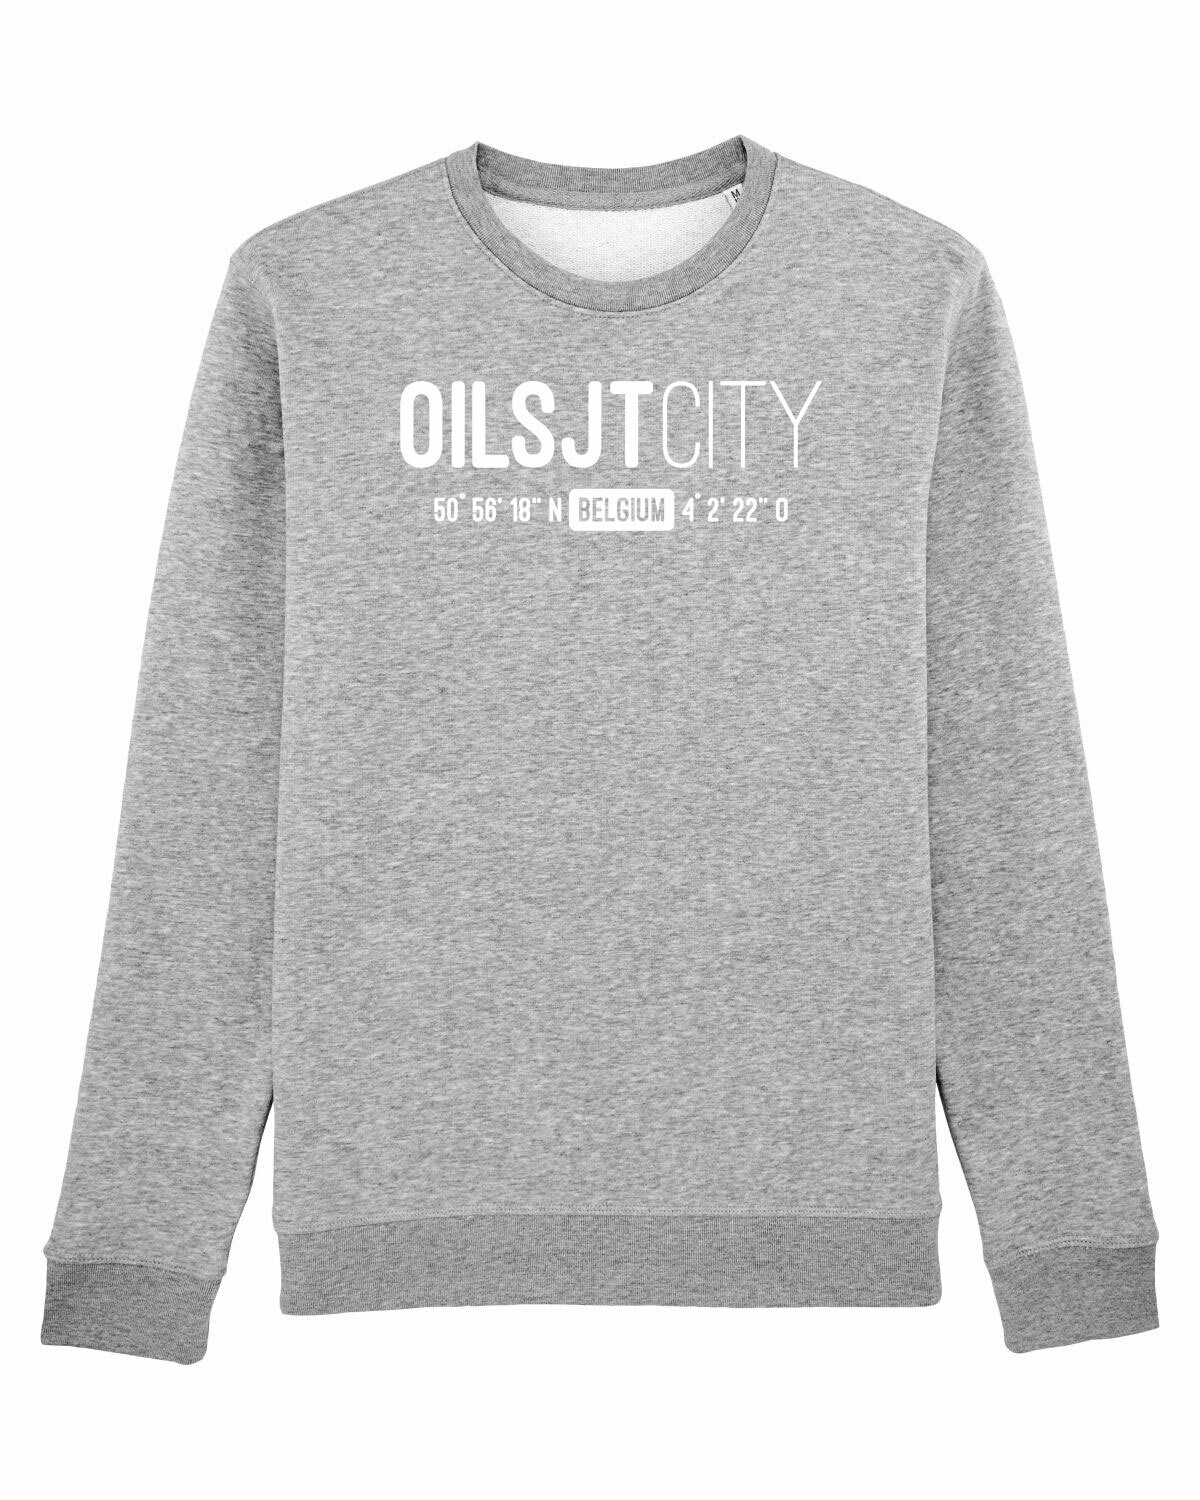 Sweater Oilsjtcity